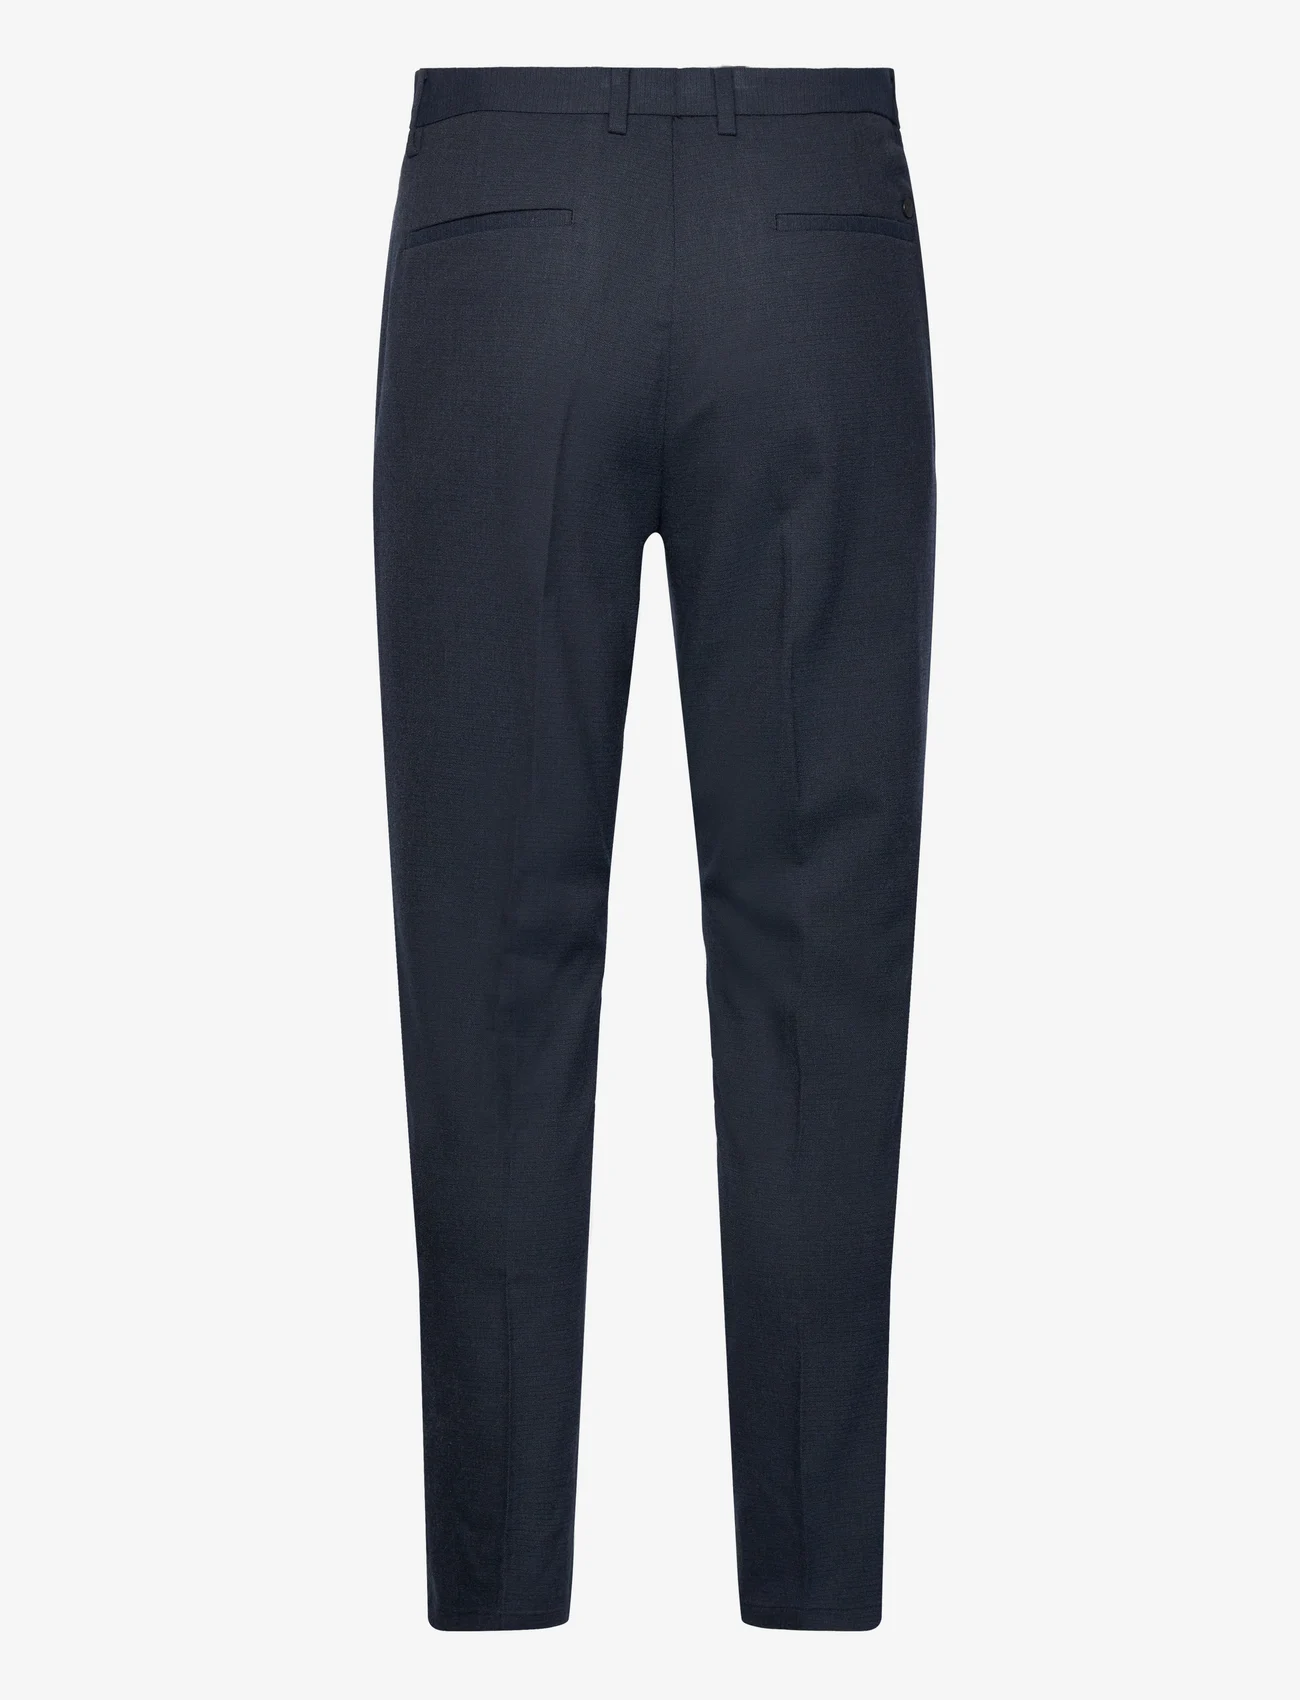 Clean Cut Copenhagen - Milano XO Logan Pants - pantalons - navy - 1